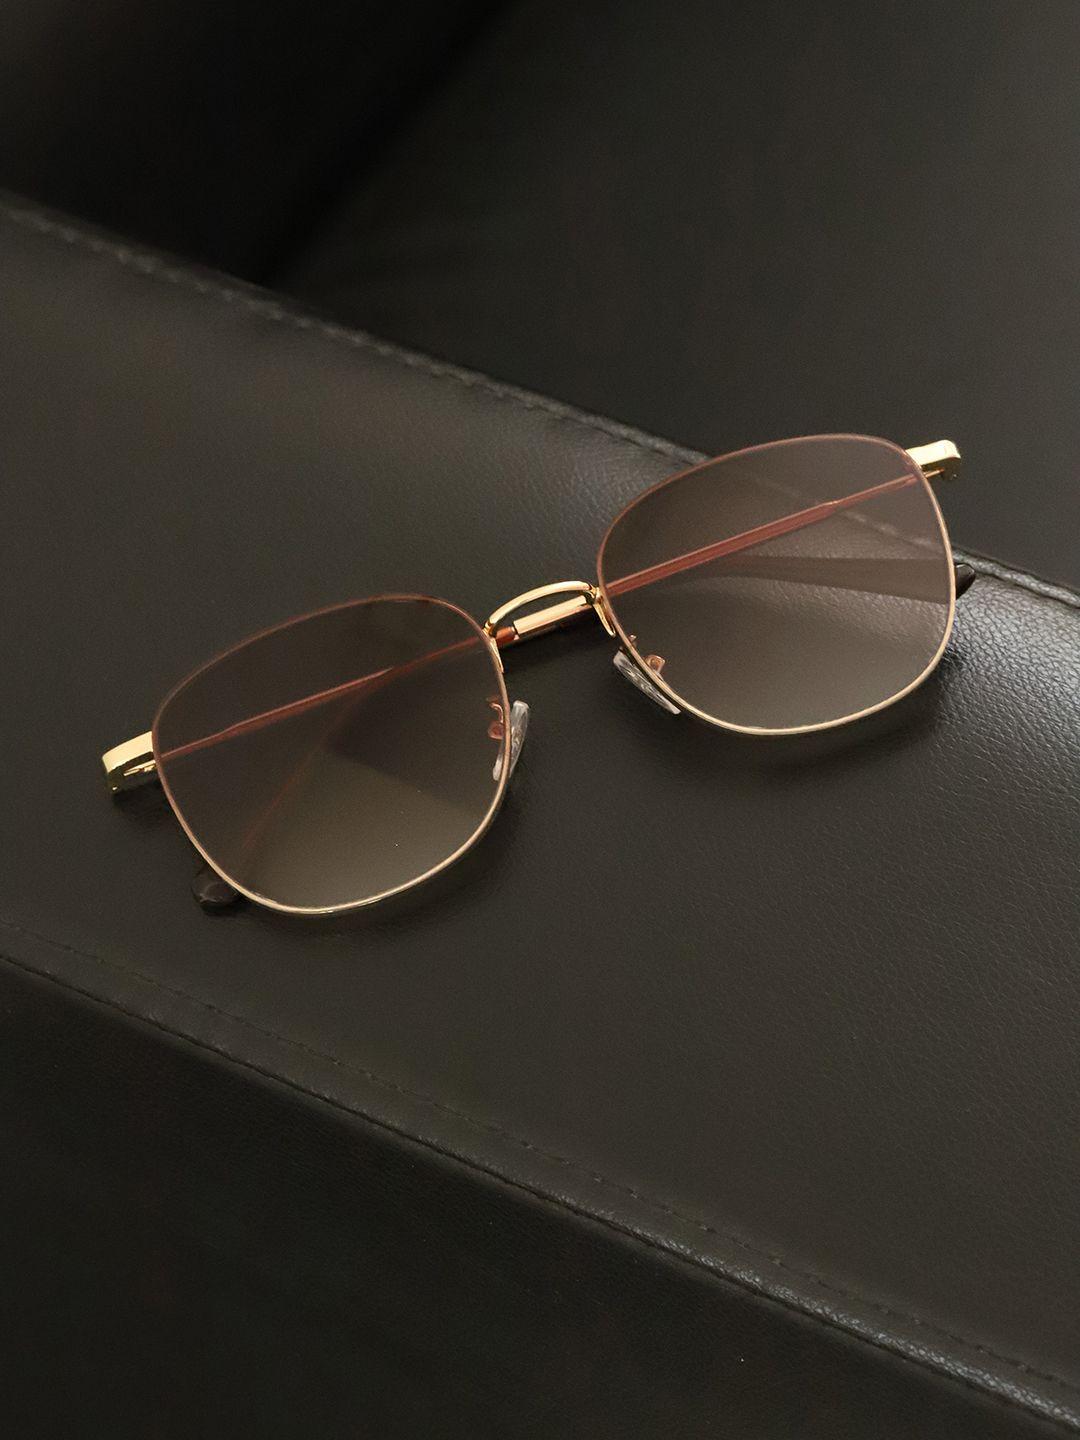 carlton-london-unisex-oval-sunglasses-b80-336